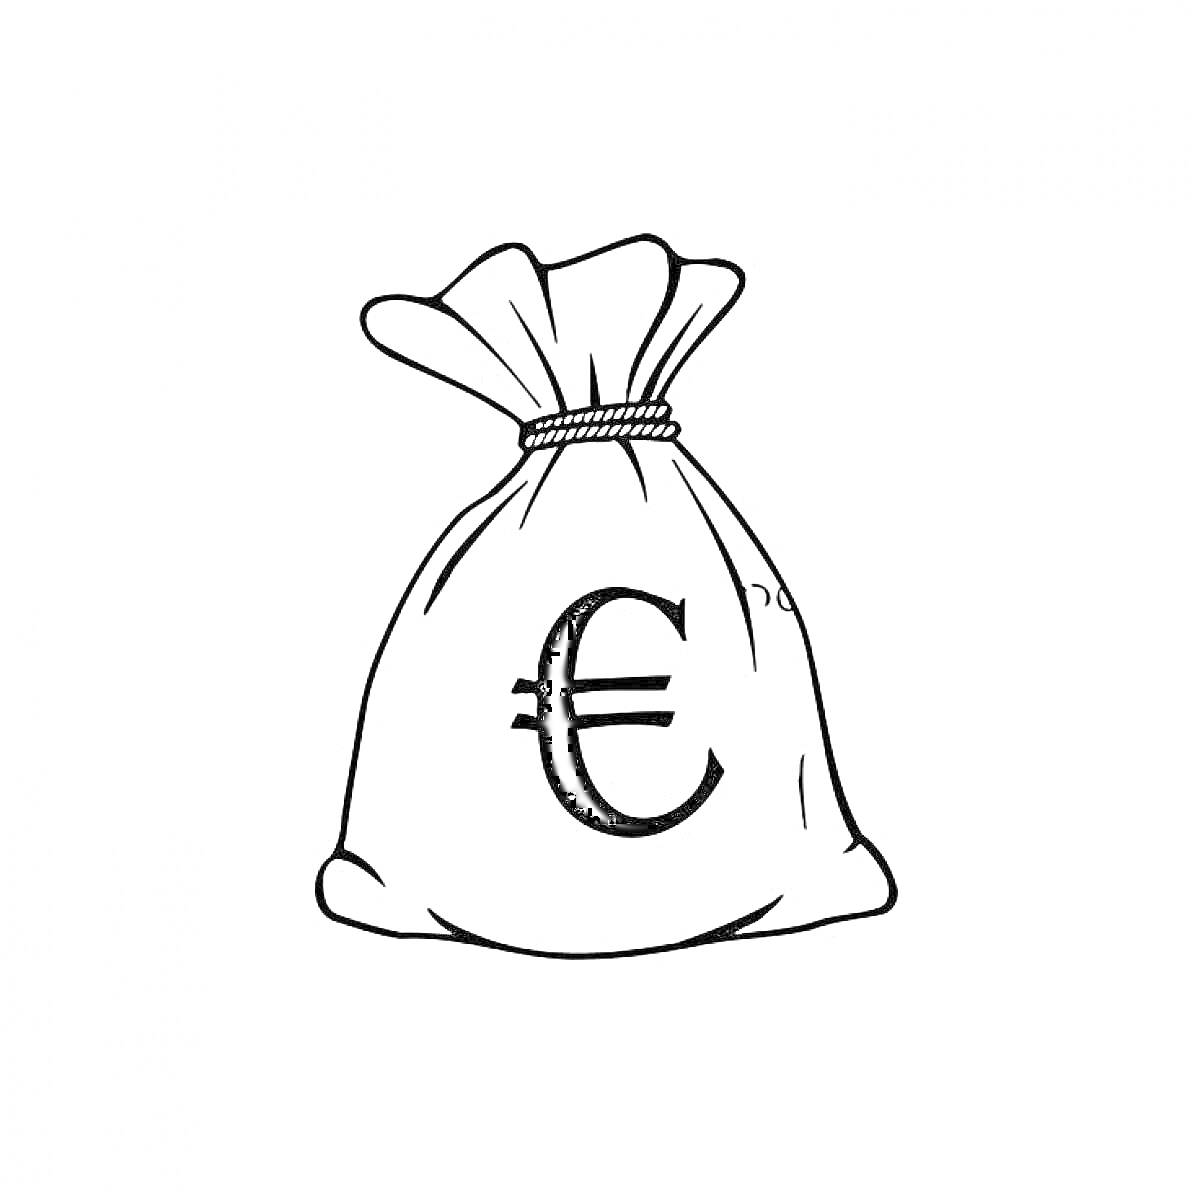 Мешок с символом евро (€)